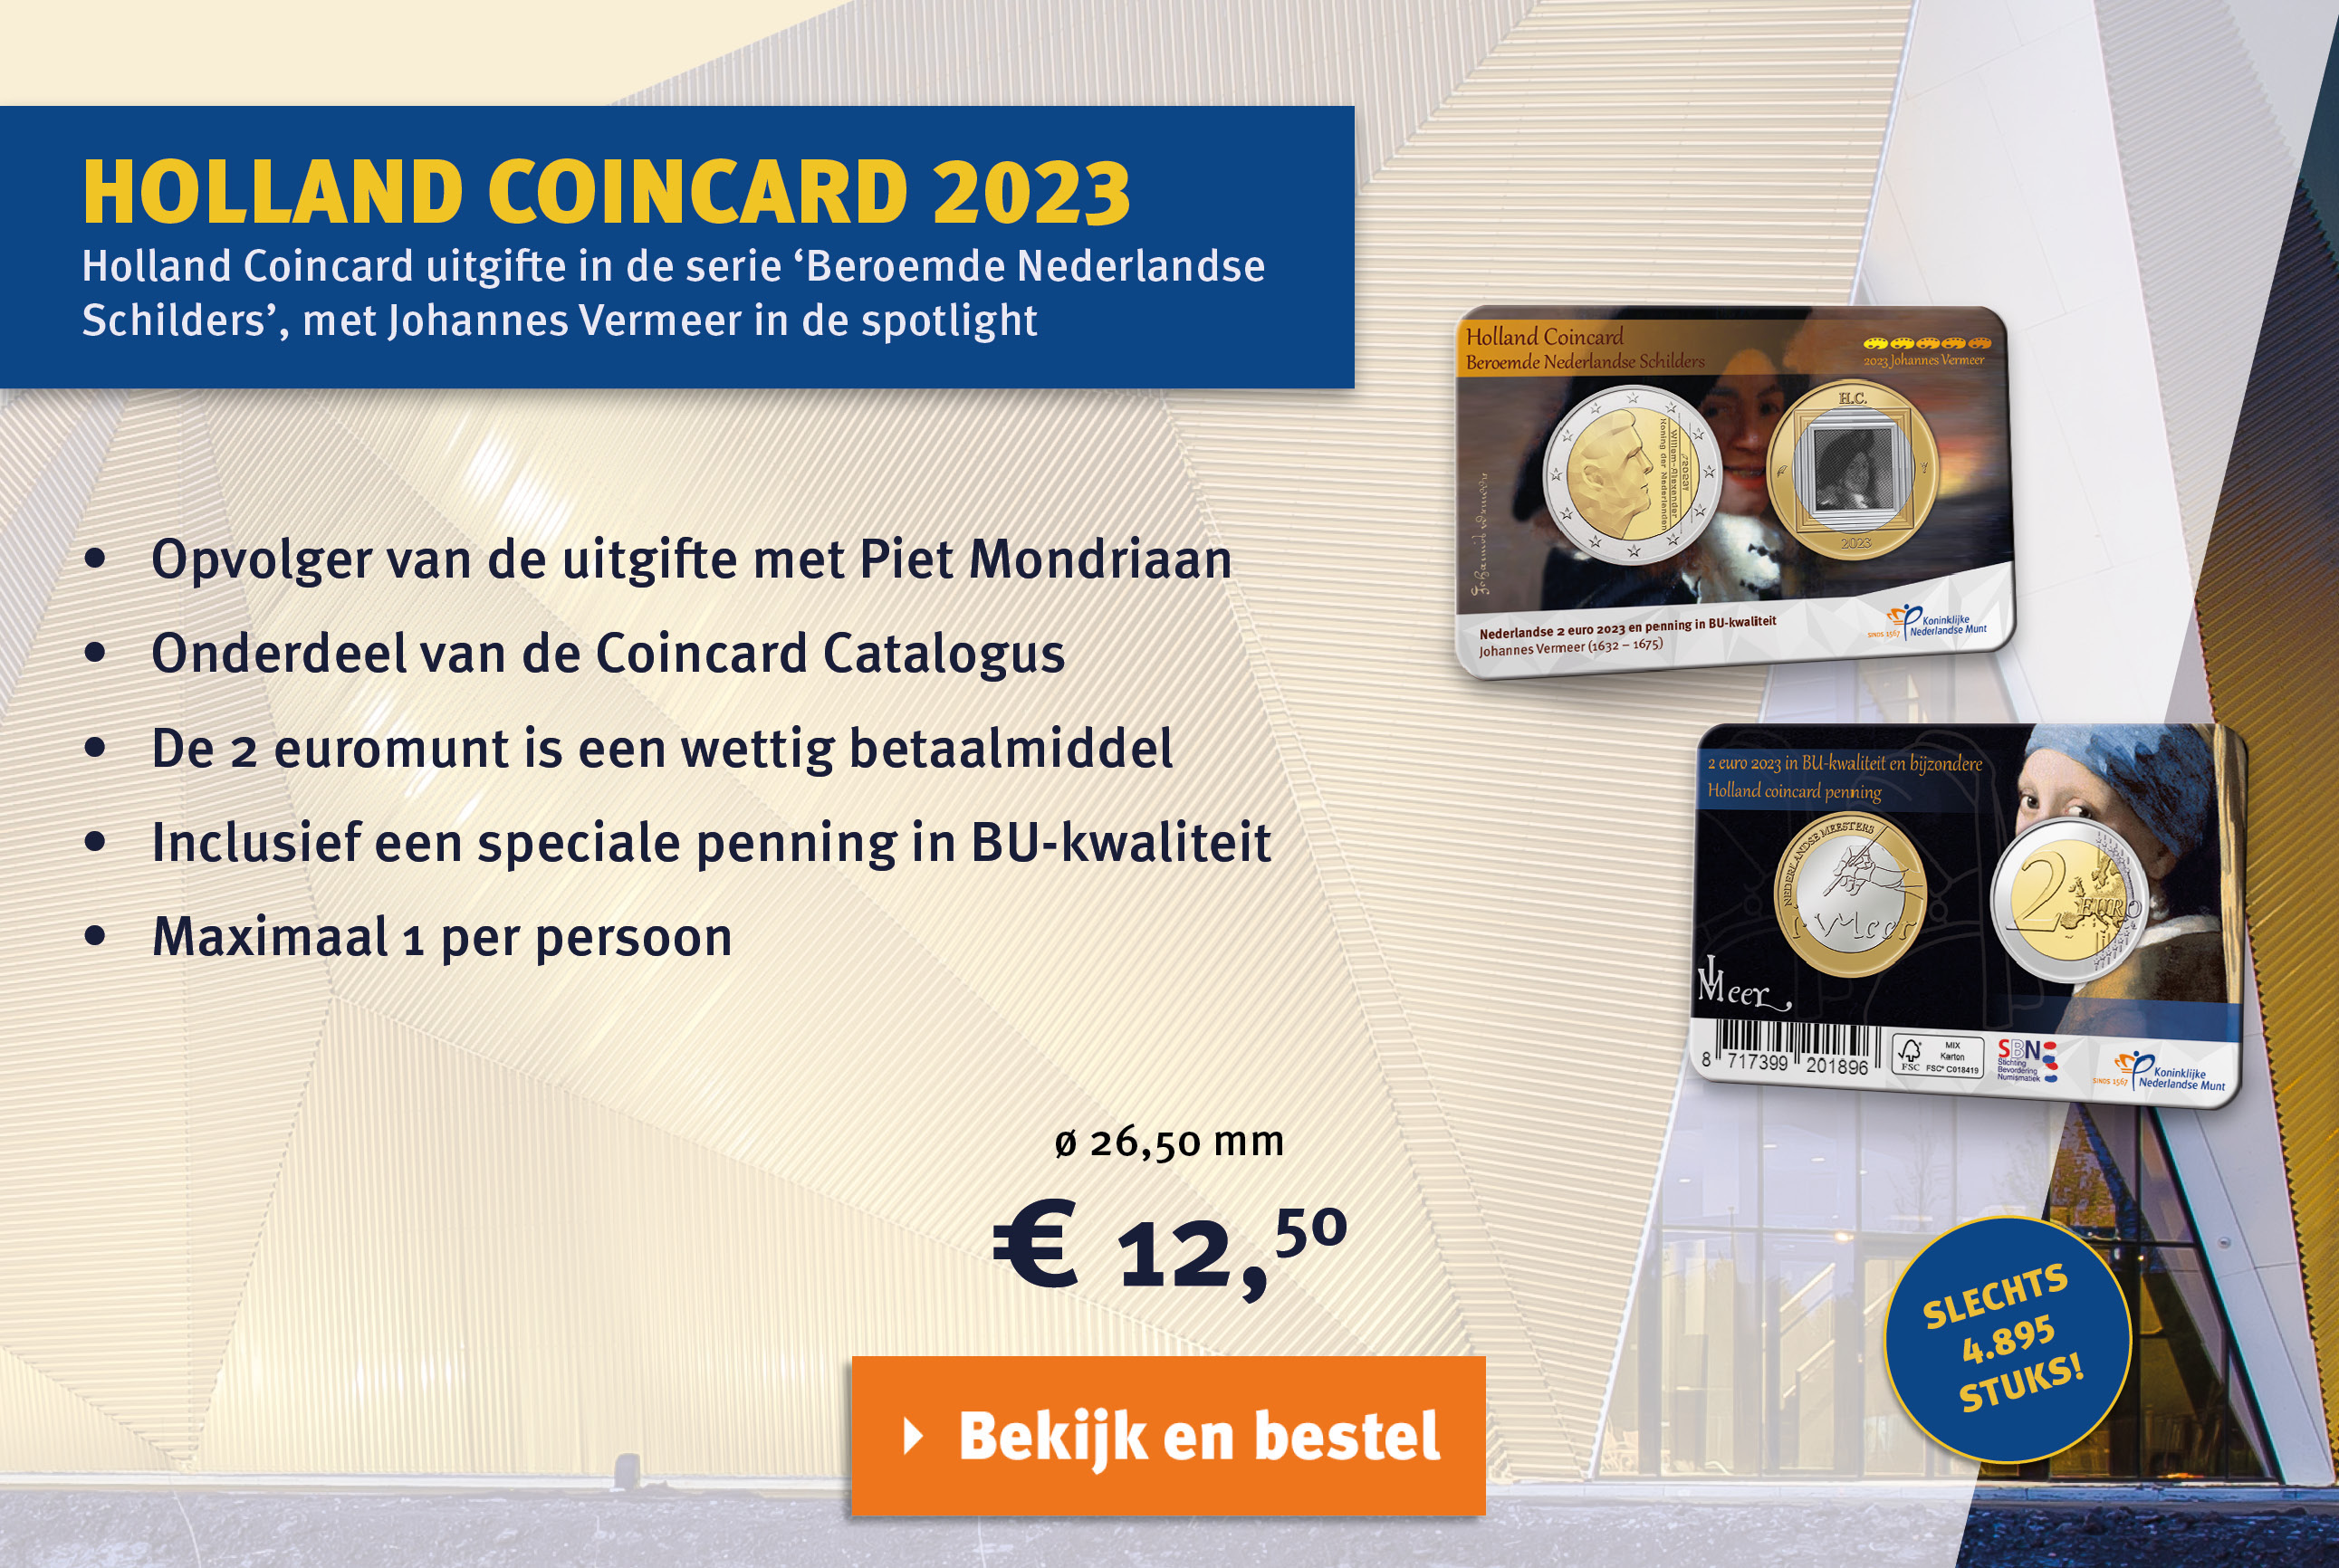 Bekijk en bestel: Holland Coincard 2023 